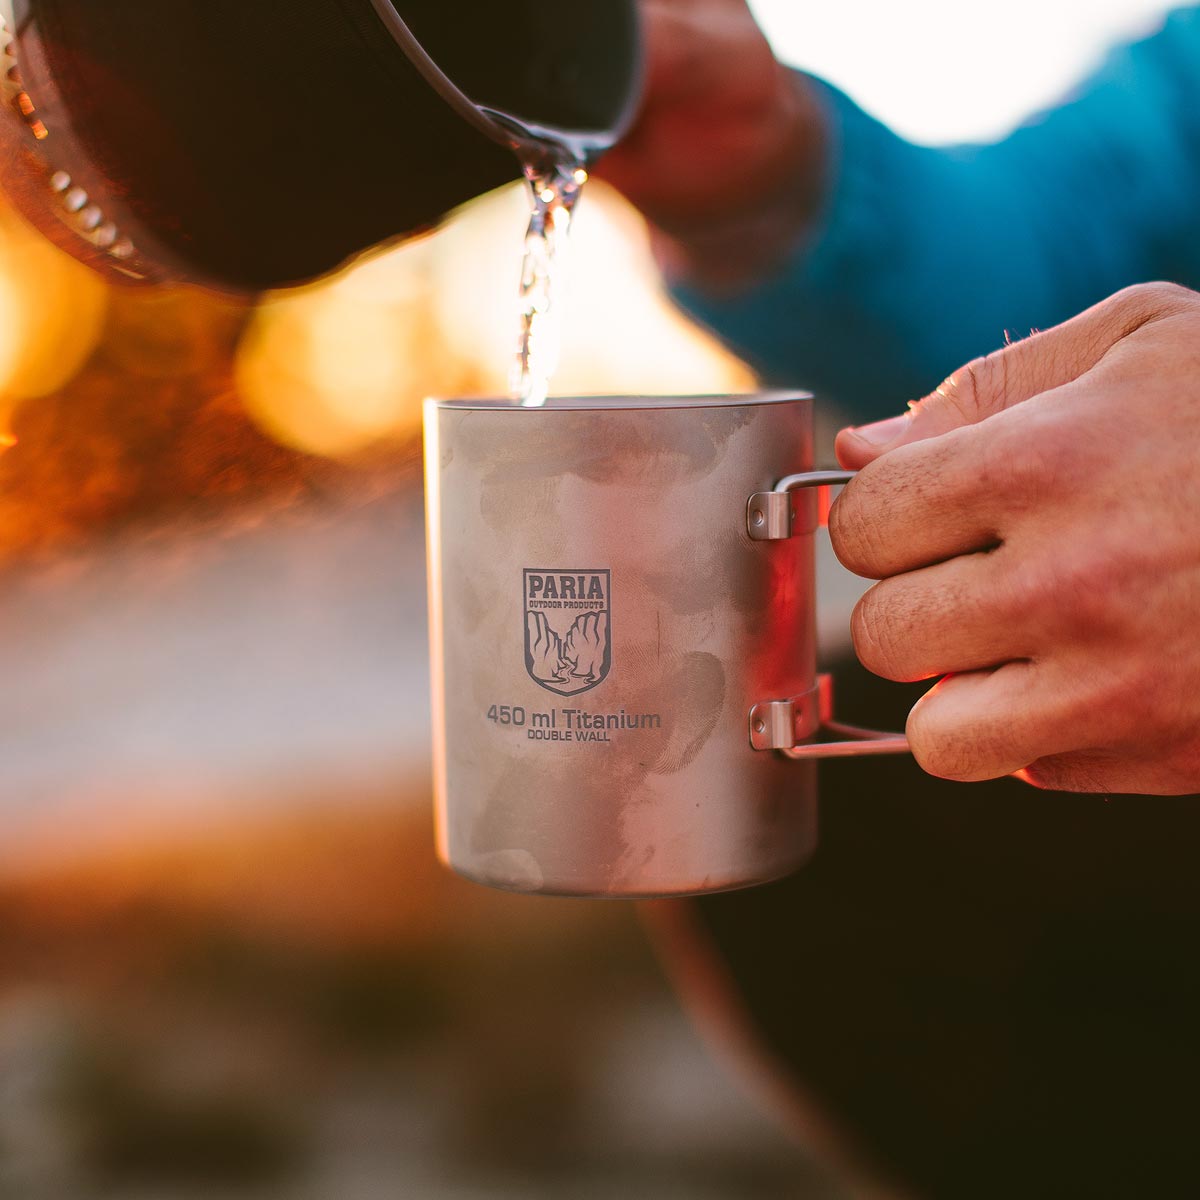 Moab Mug - Utah Coffee Mug - Stainless Steel and Insulated Camping